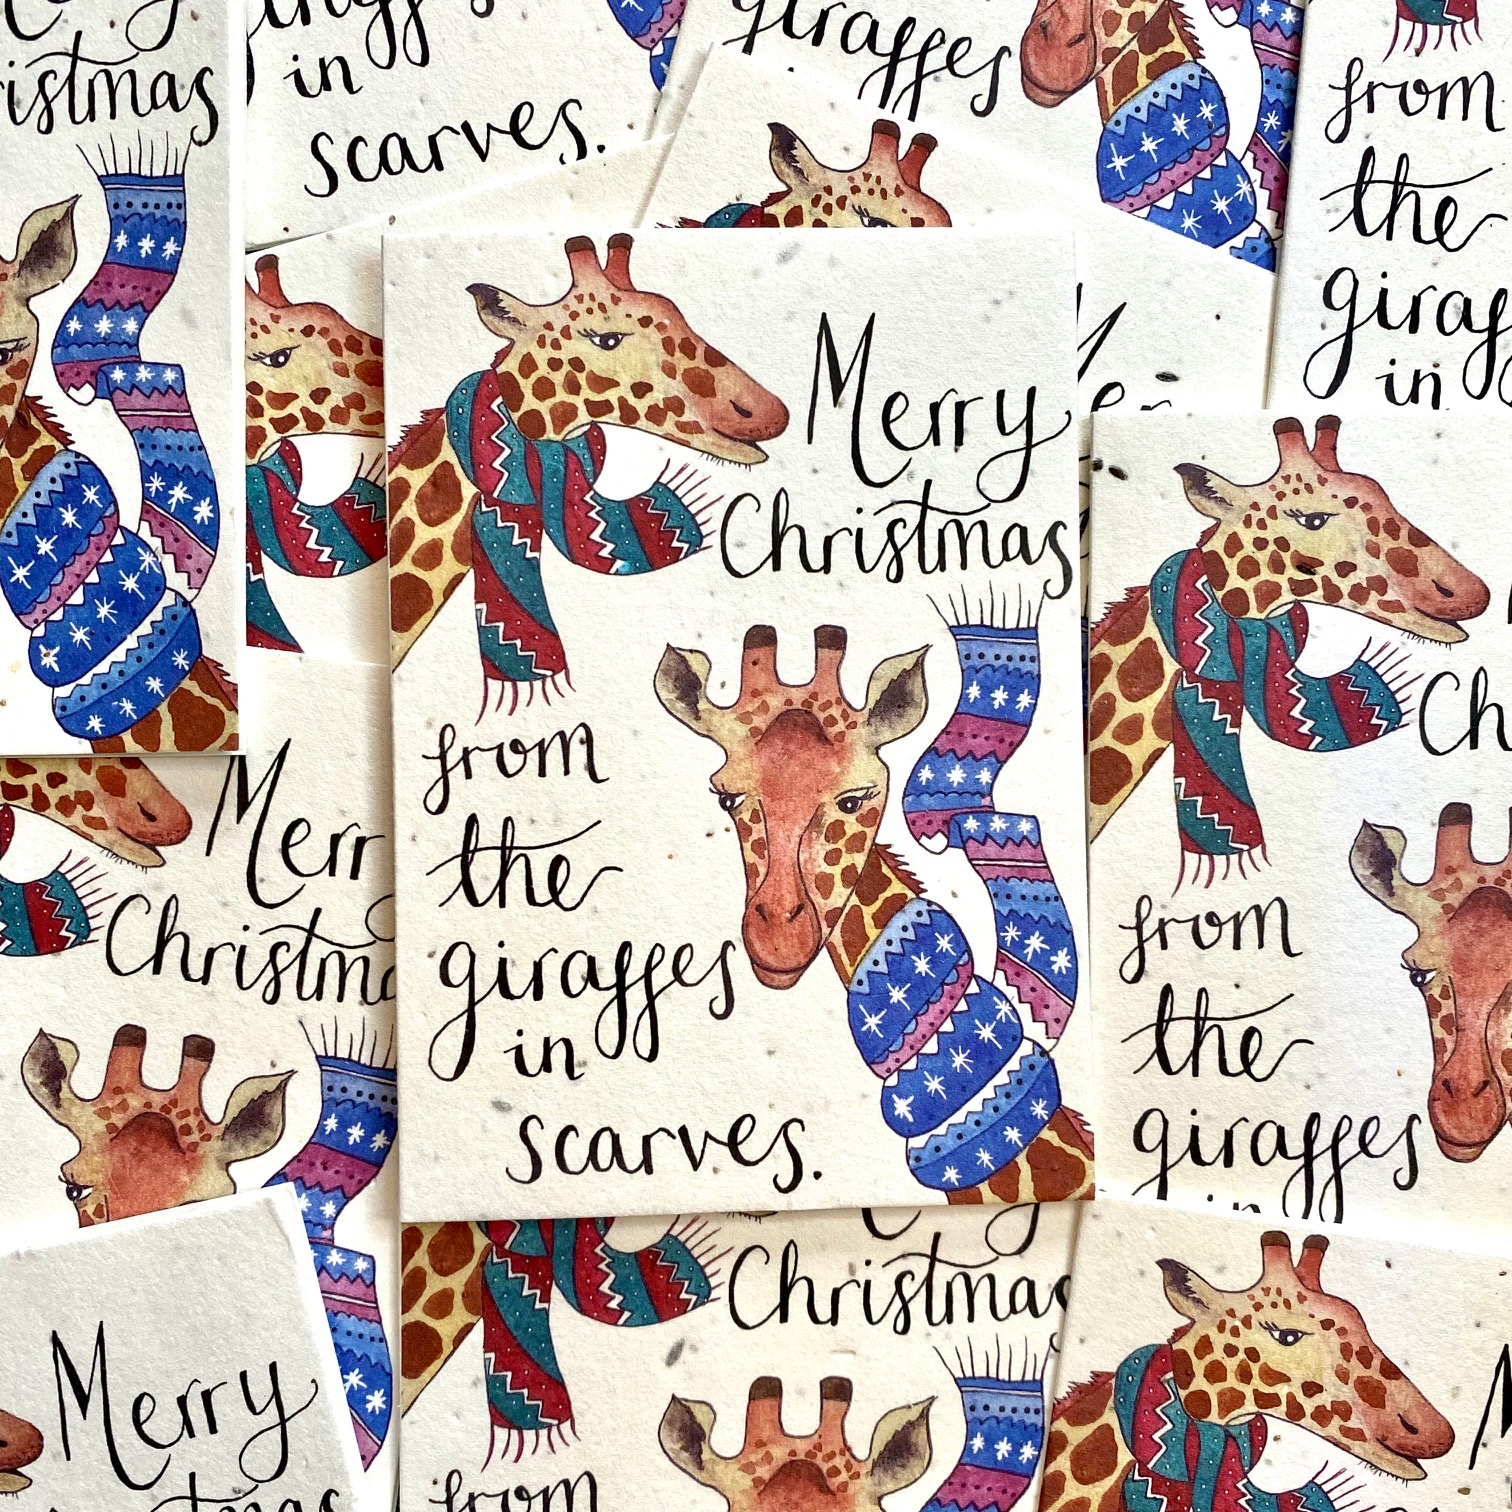 Giraffes in Scarves card